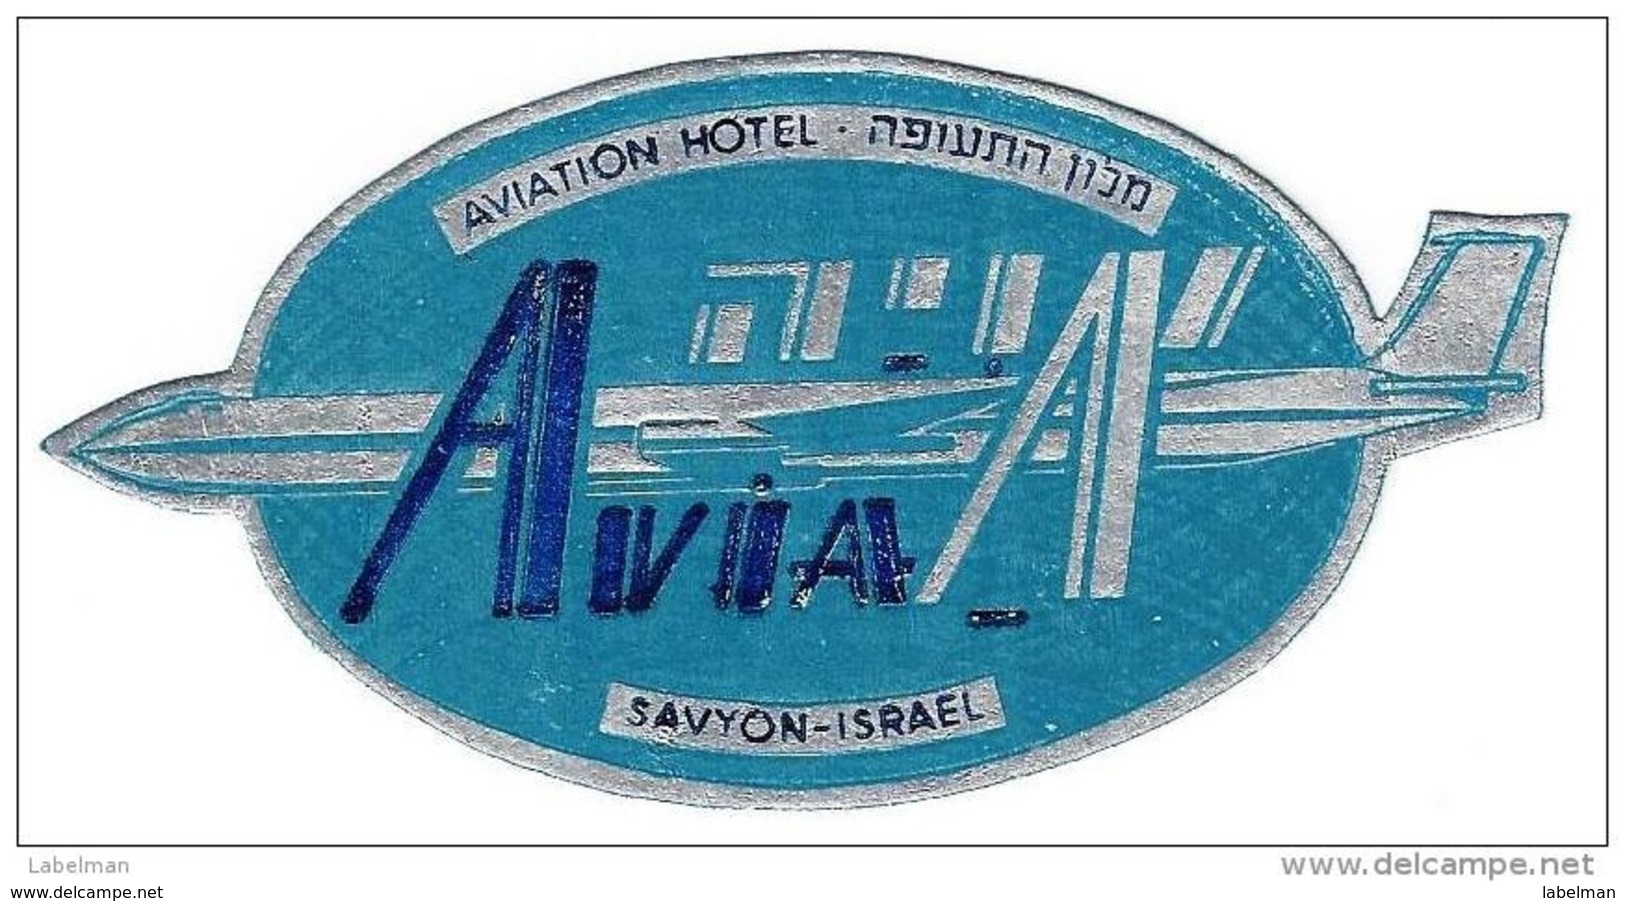 HOTEL MOTEL PENSION RESIDENCE AVIA AIRPORT PLANE TEL AVIV ISRAEL TAG STICKER DECAL LUGGAGE LABEL ETIQUETTE AUFKLEBER - Etiketten Van Hotels